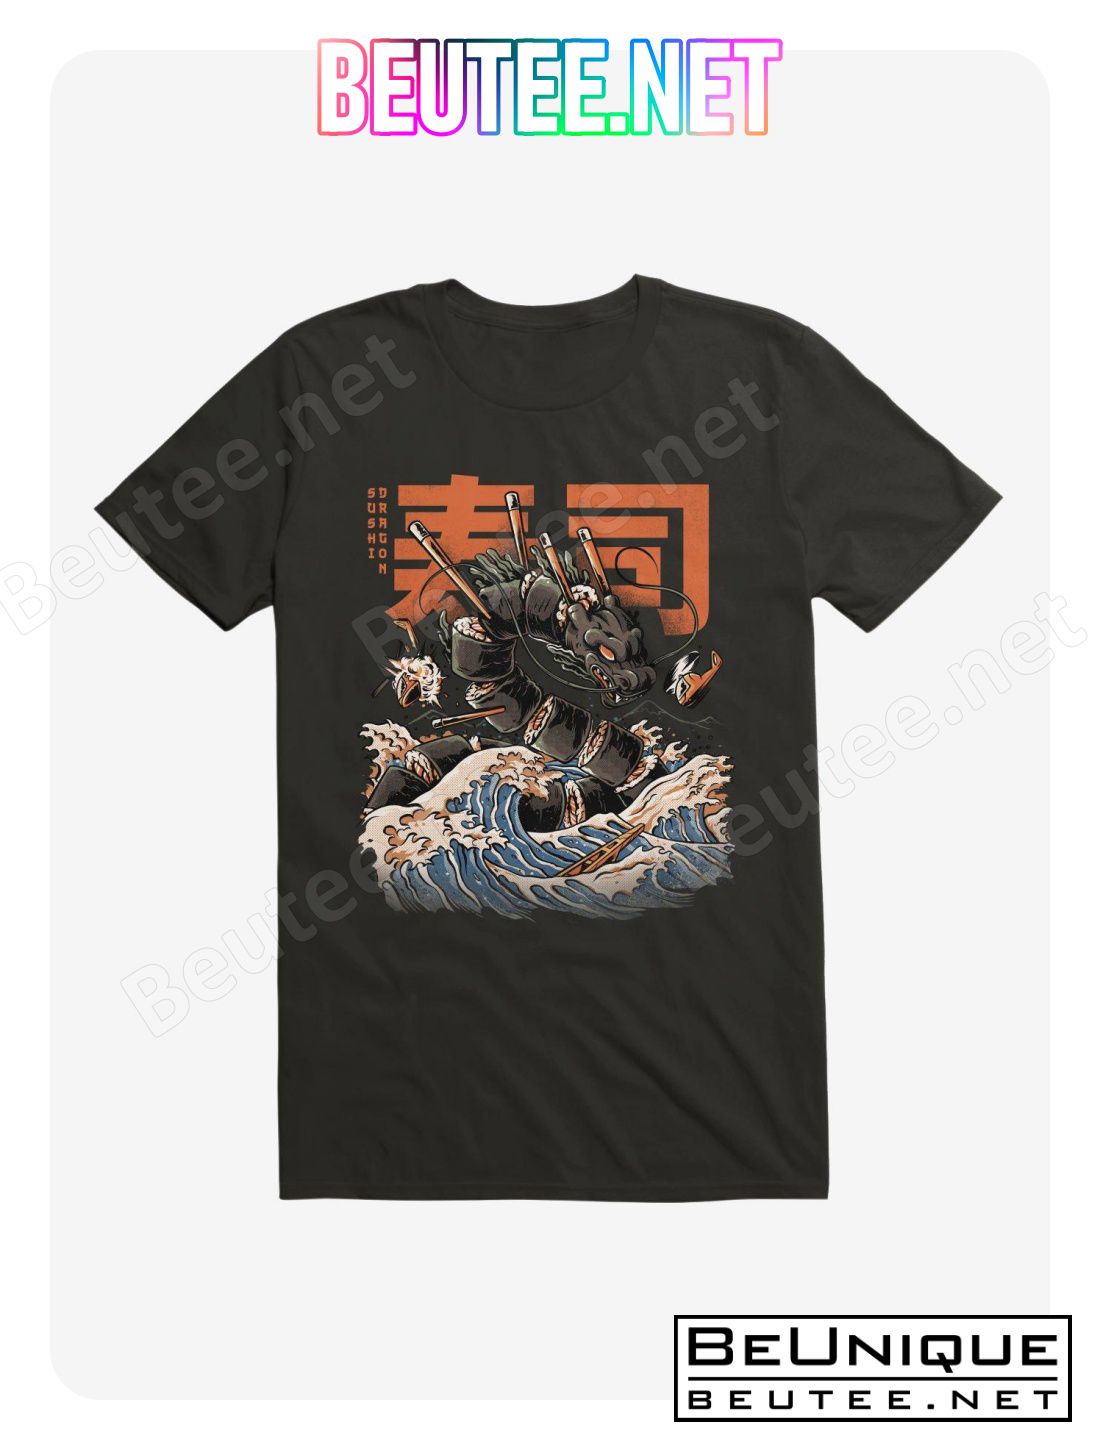 The Black Sushi Dragon Attack Black T-Shirt